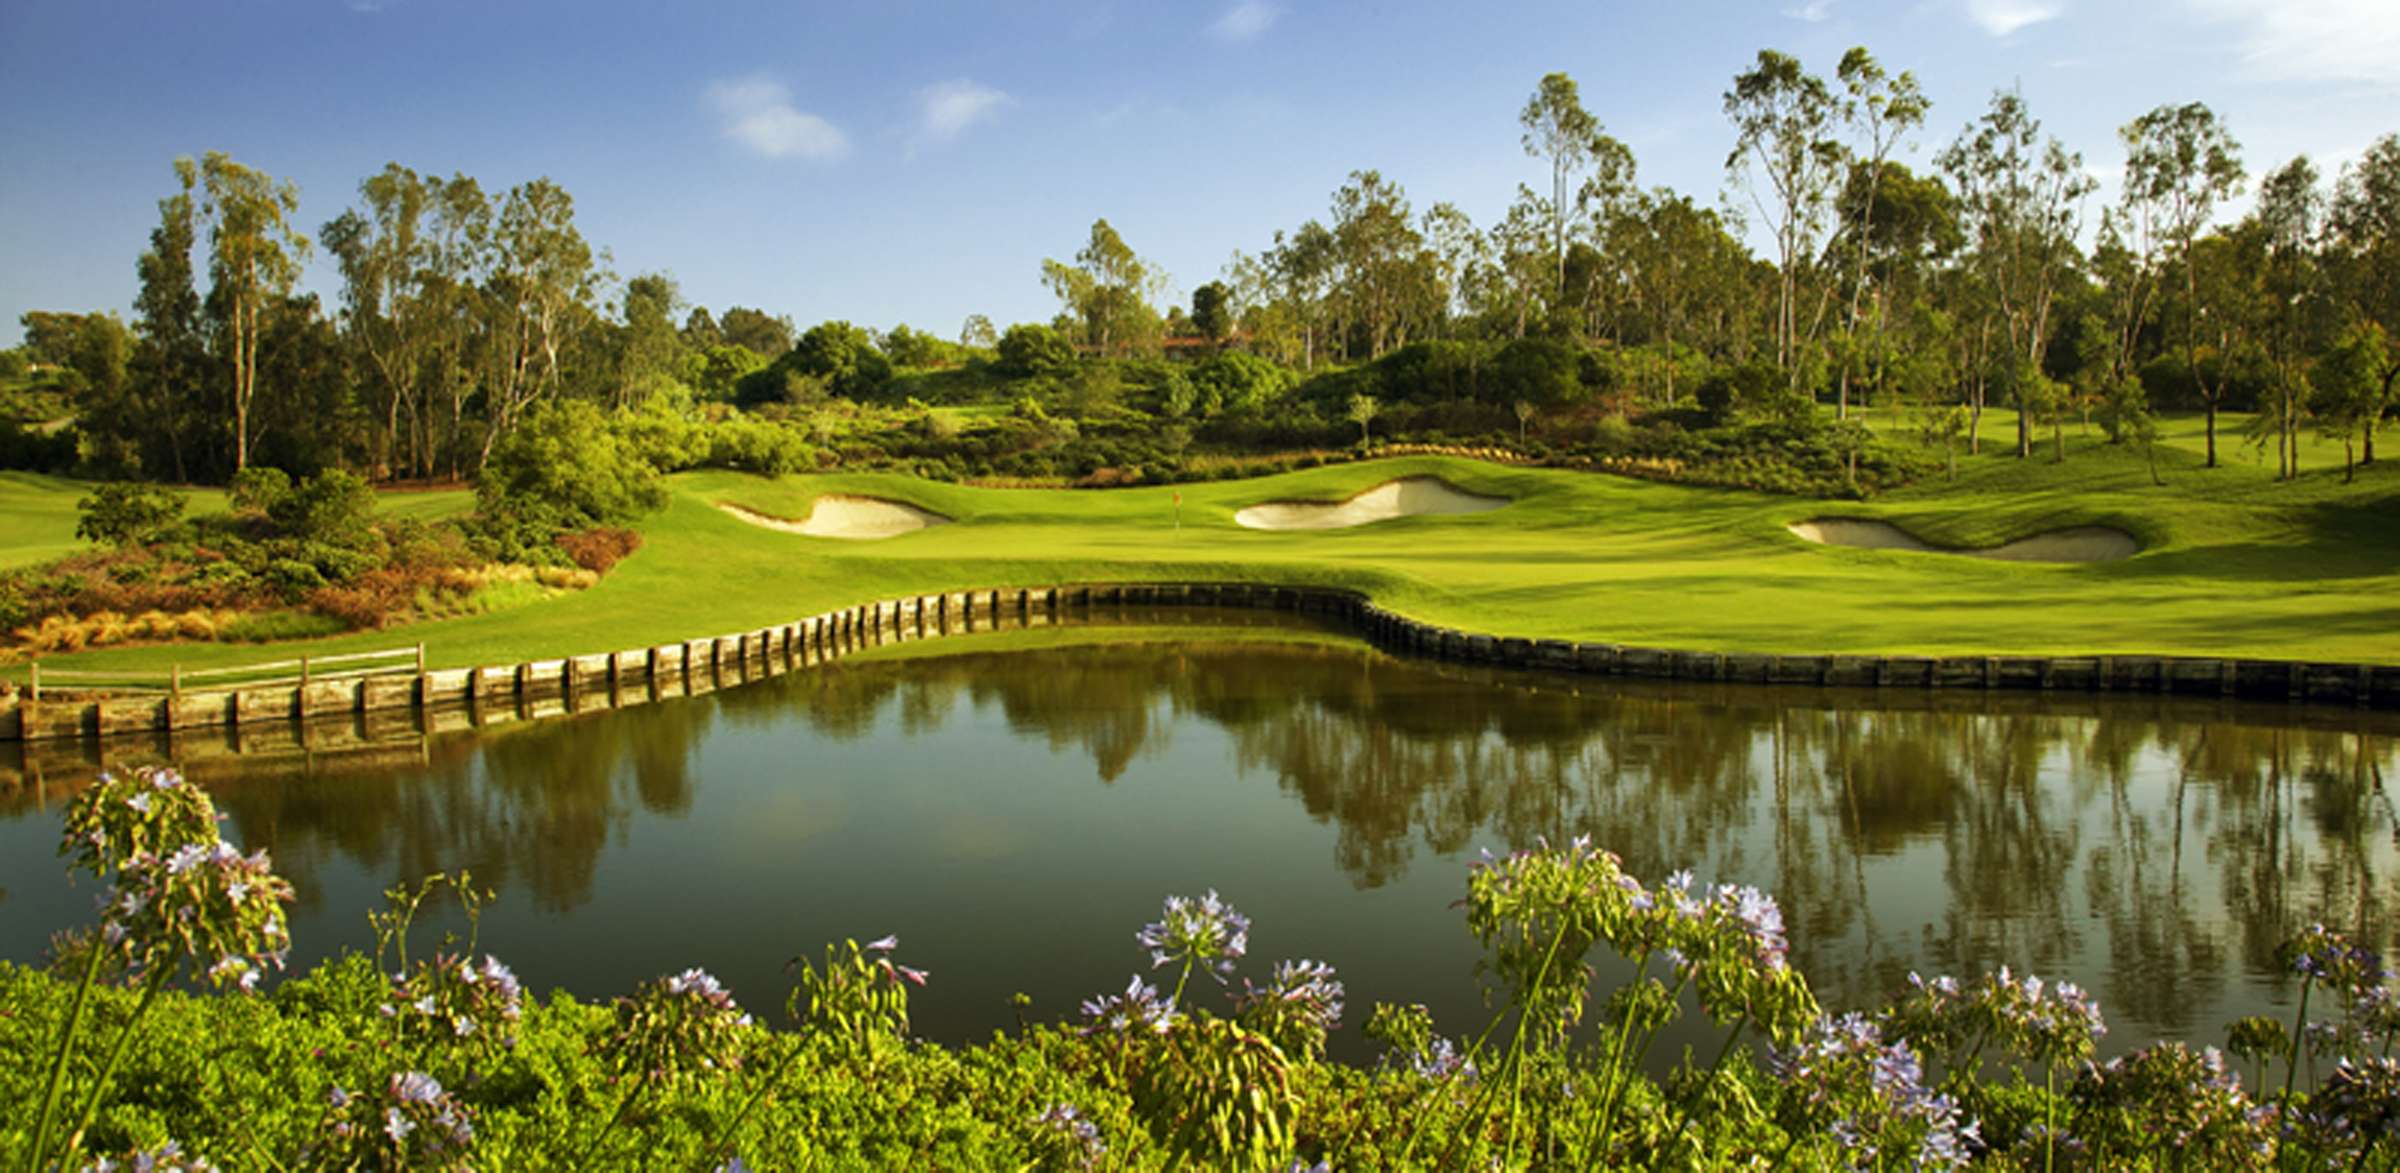 Best Golf Courses near Del Mar, Rancho Santa fe and Carmel ...